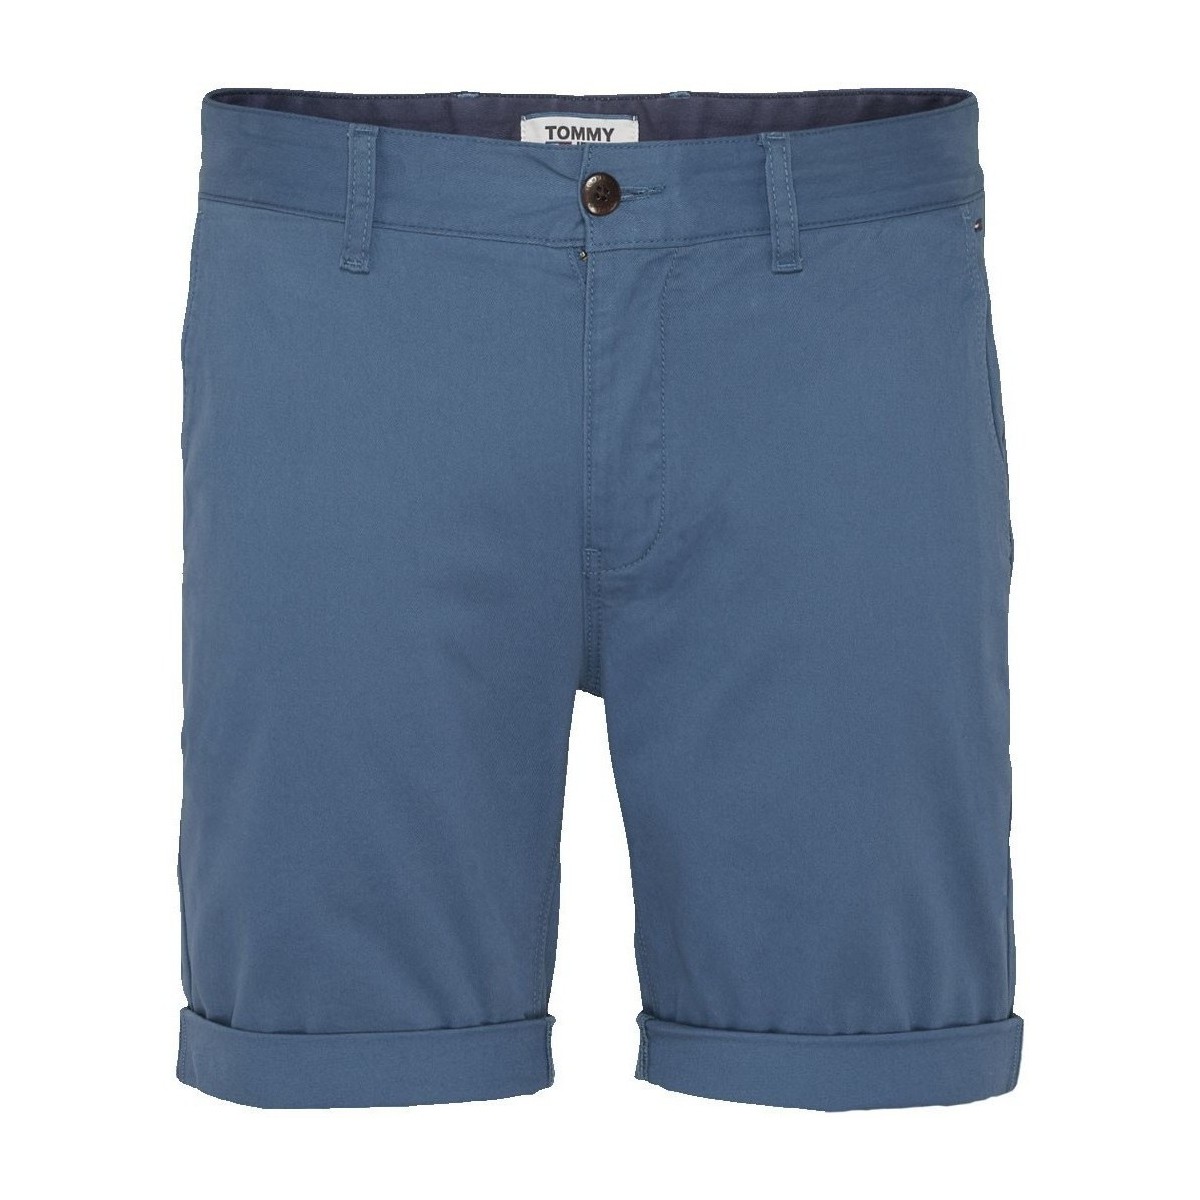 Vêtements Homme Shorts / Bermudas Tommy Jeans Short Chino  ref_49494 Bleu Bleu